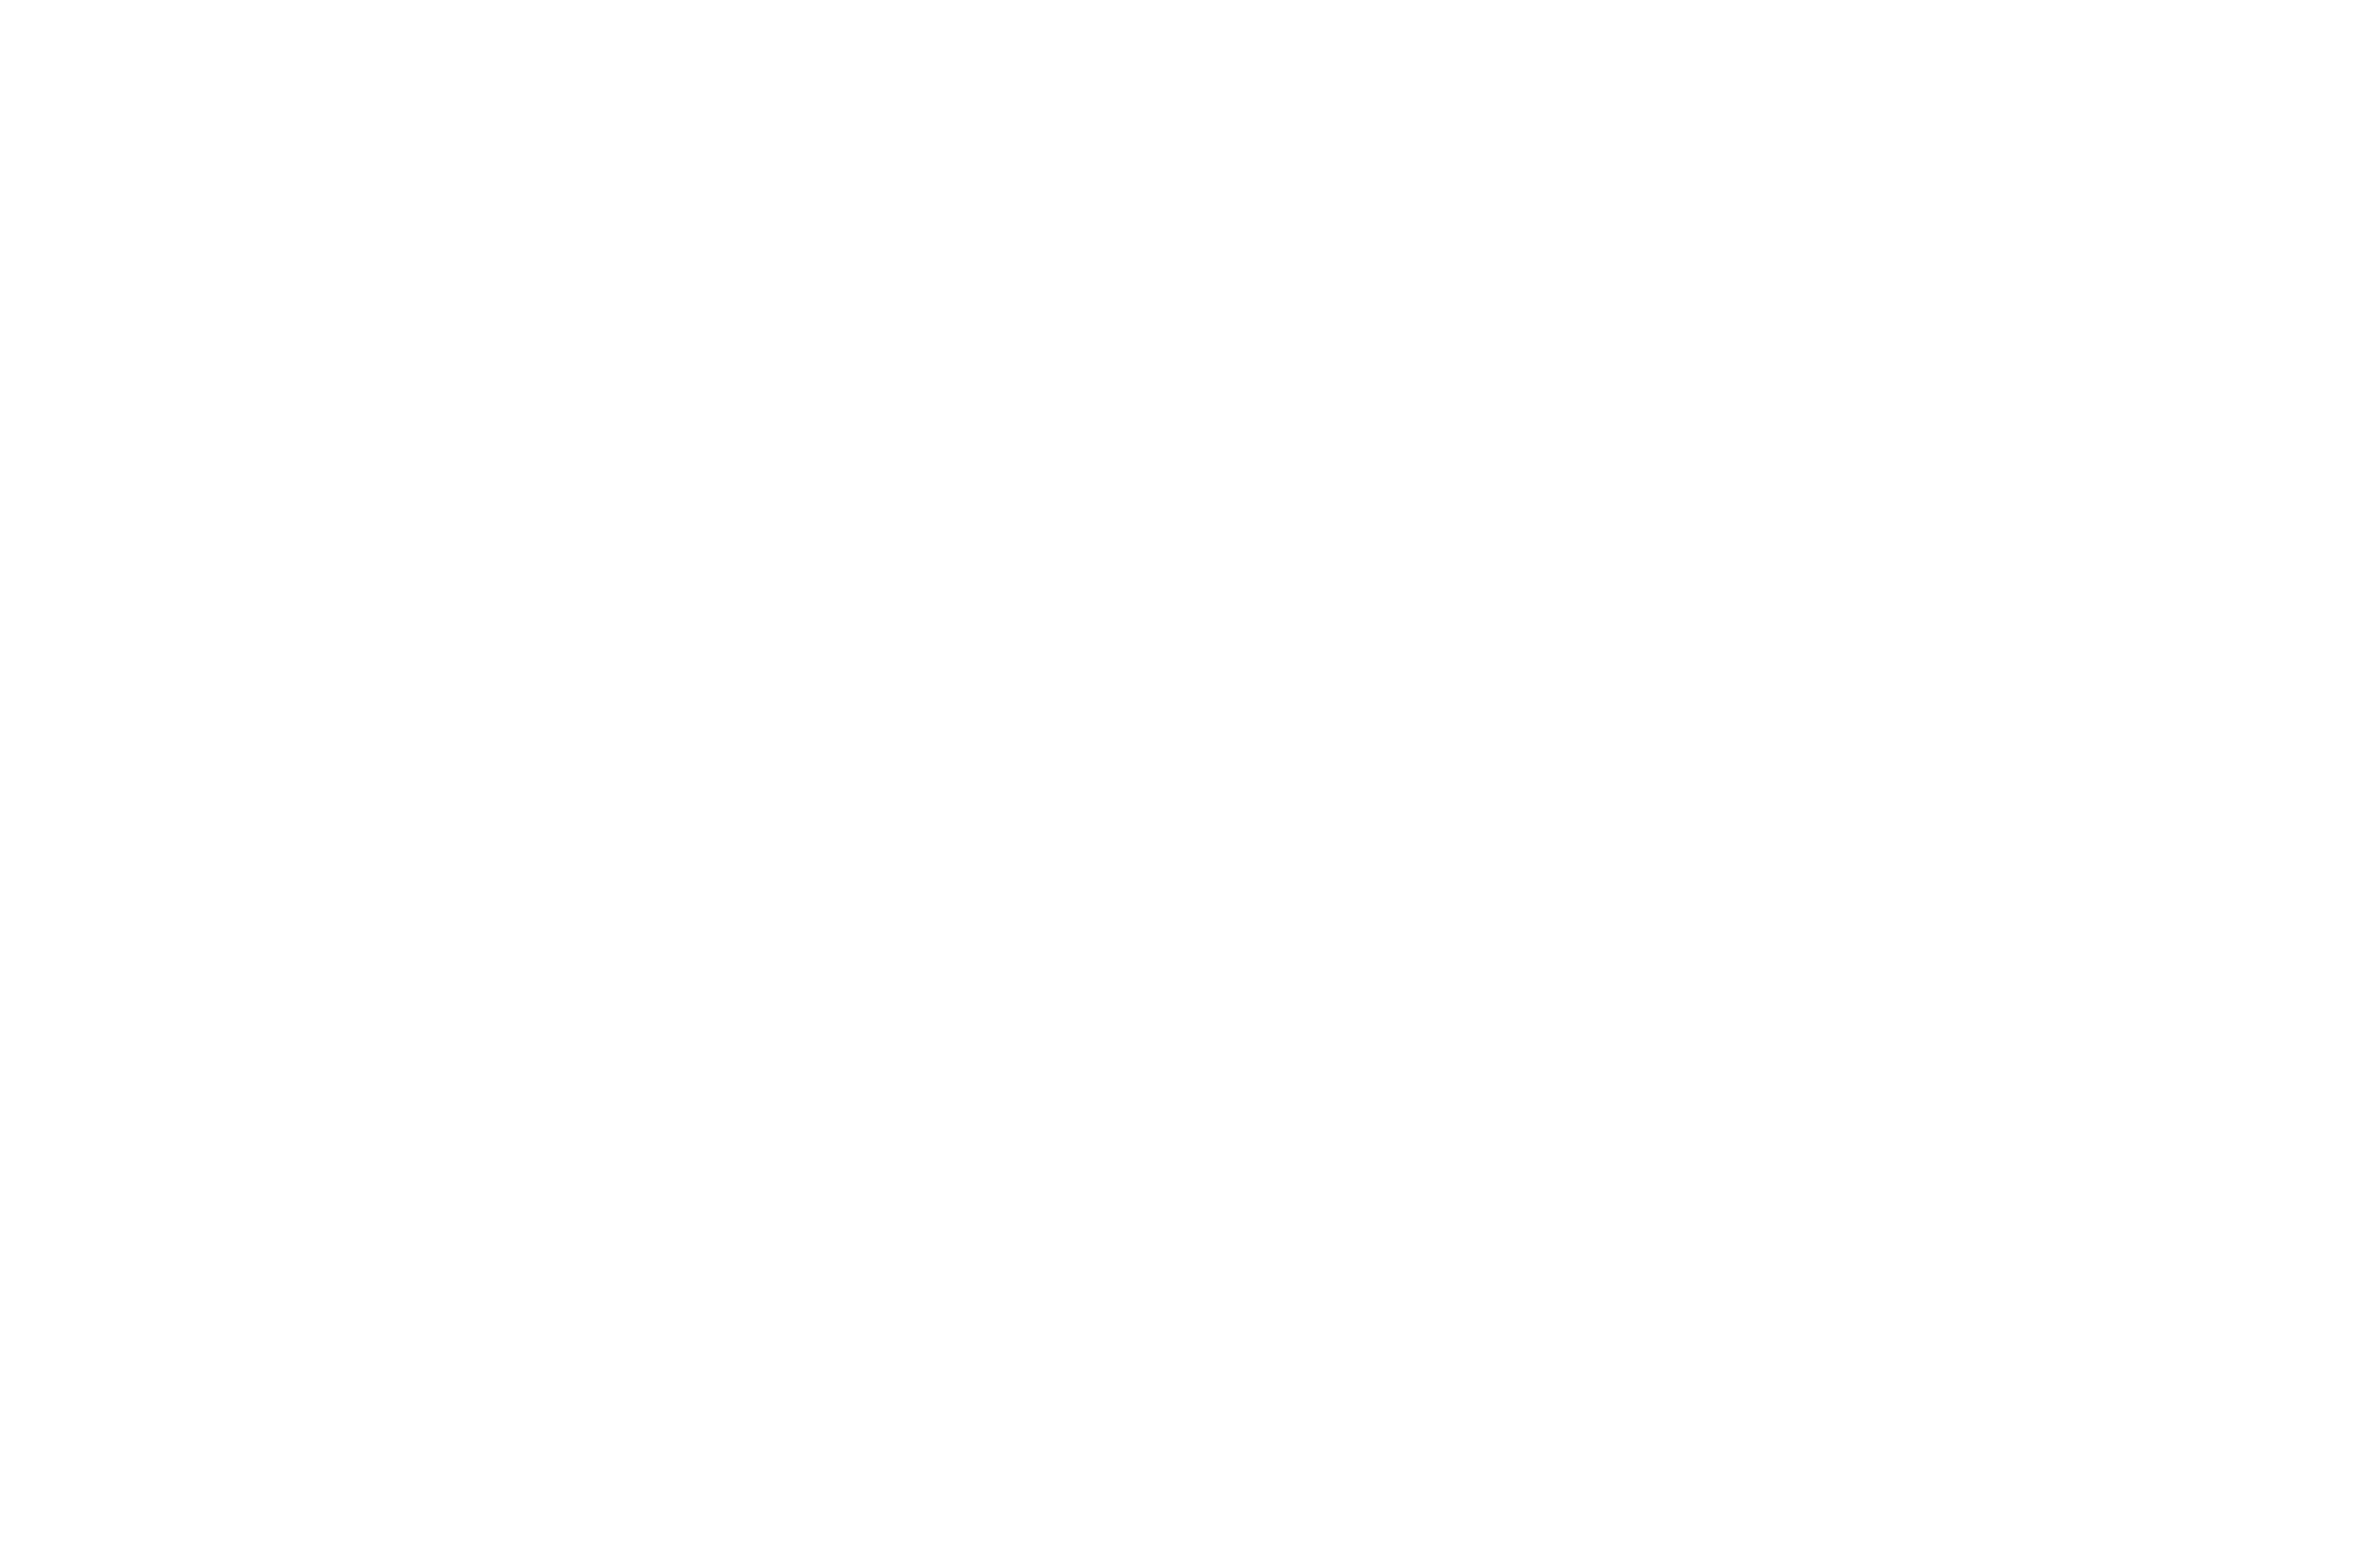 Coach Mohammad